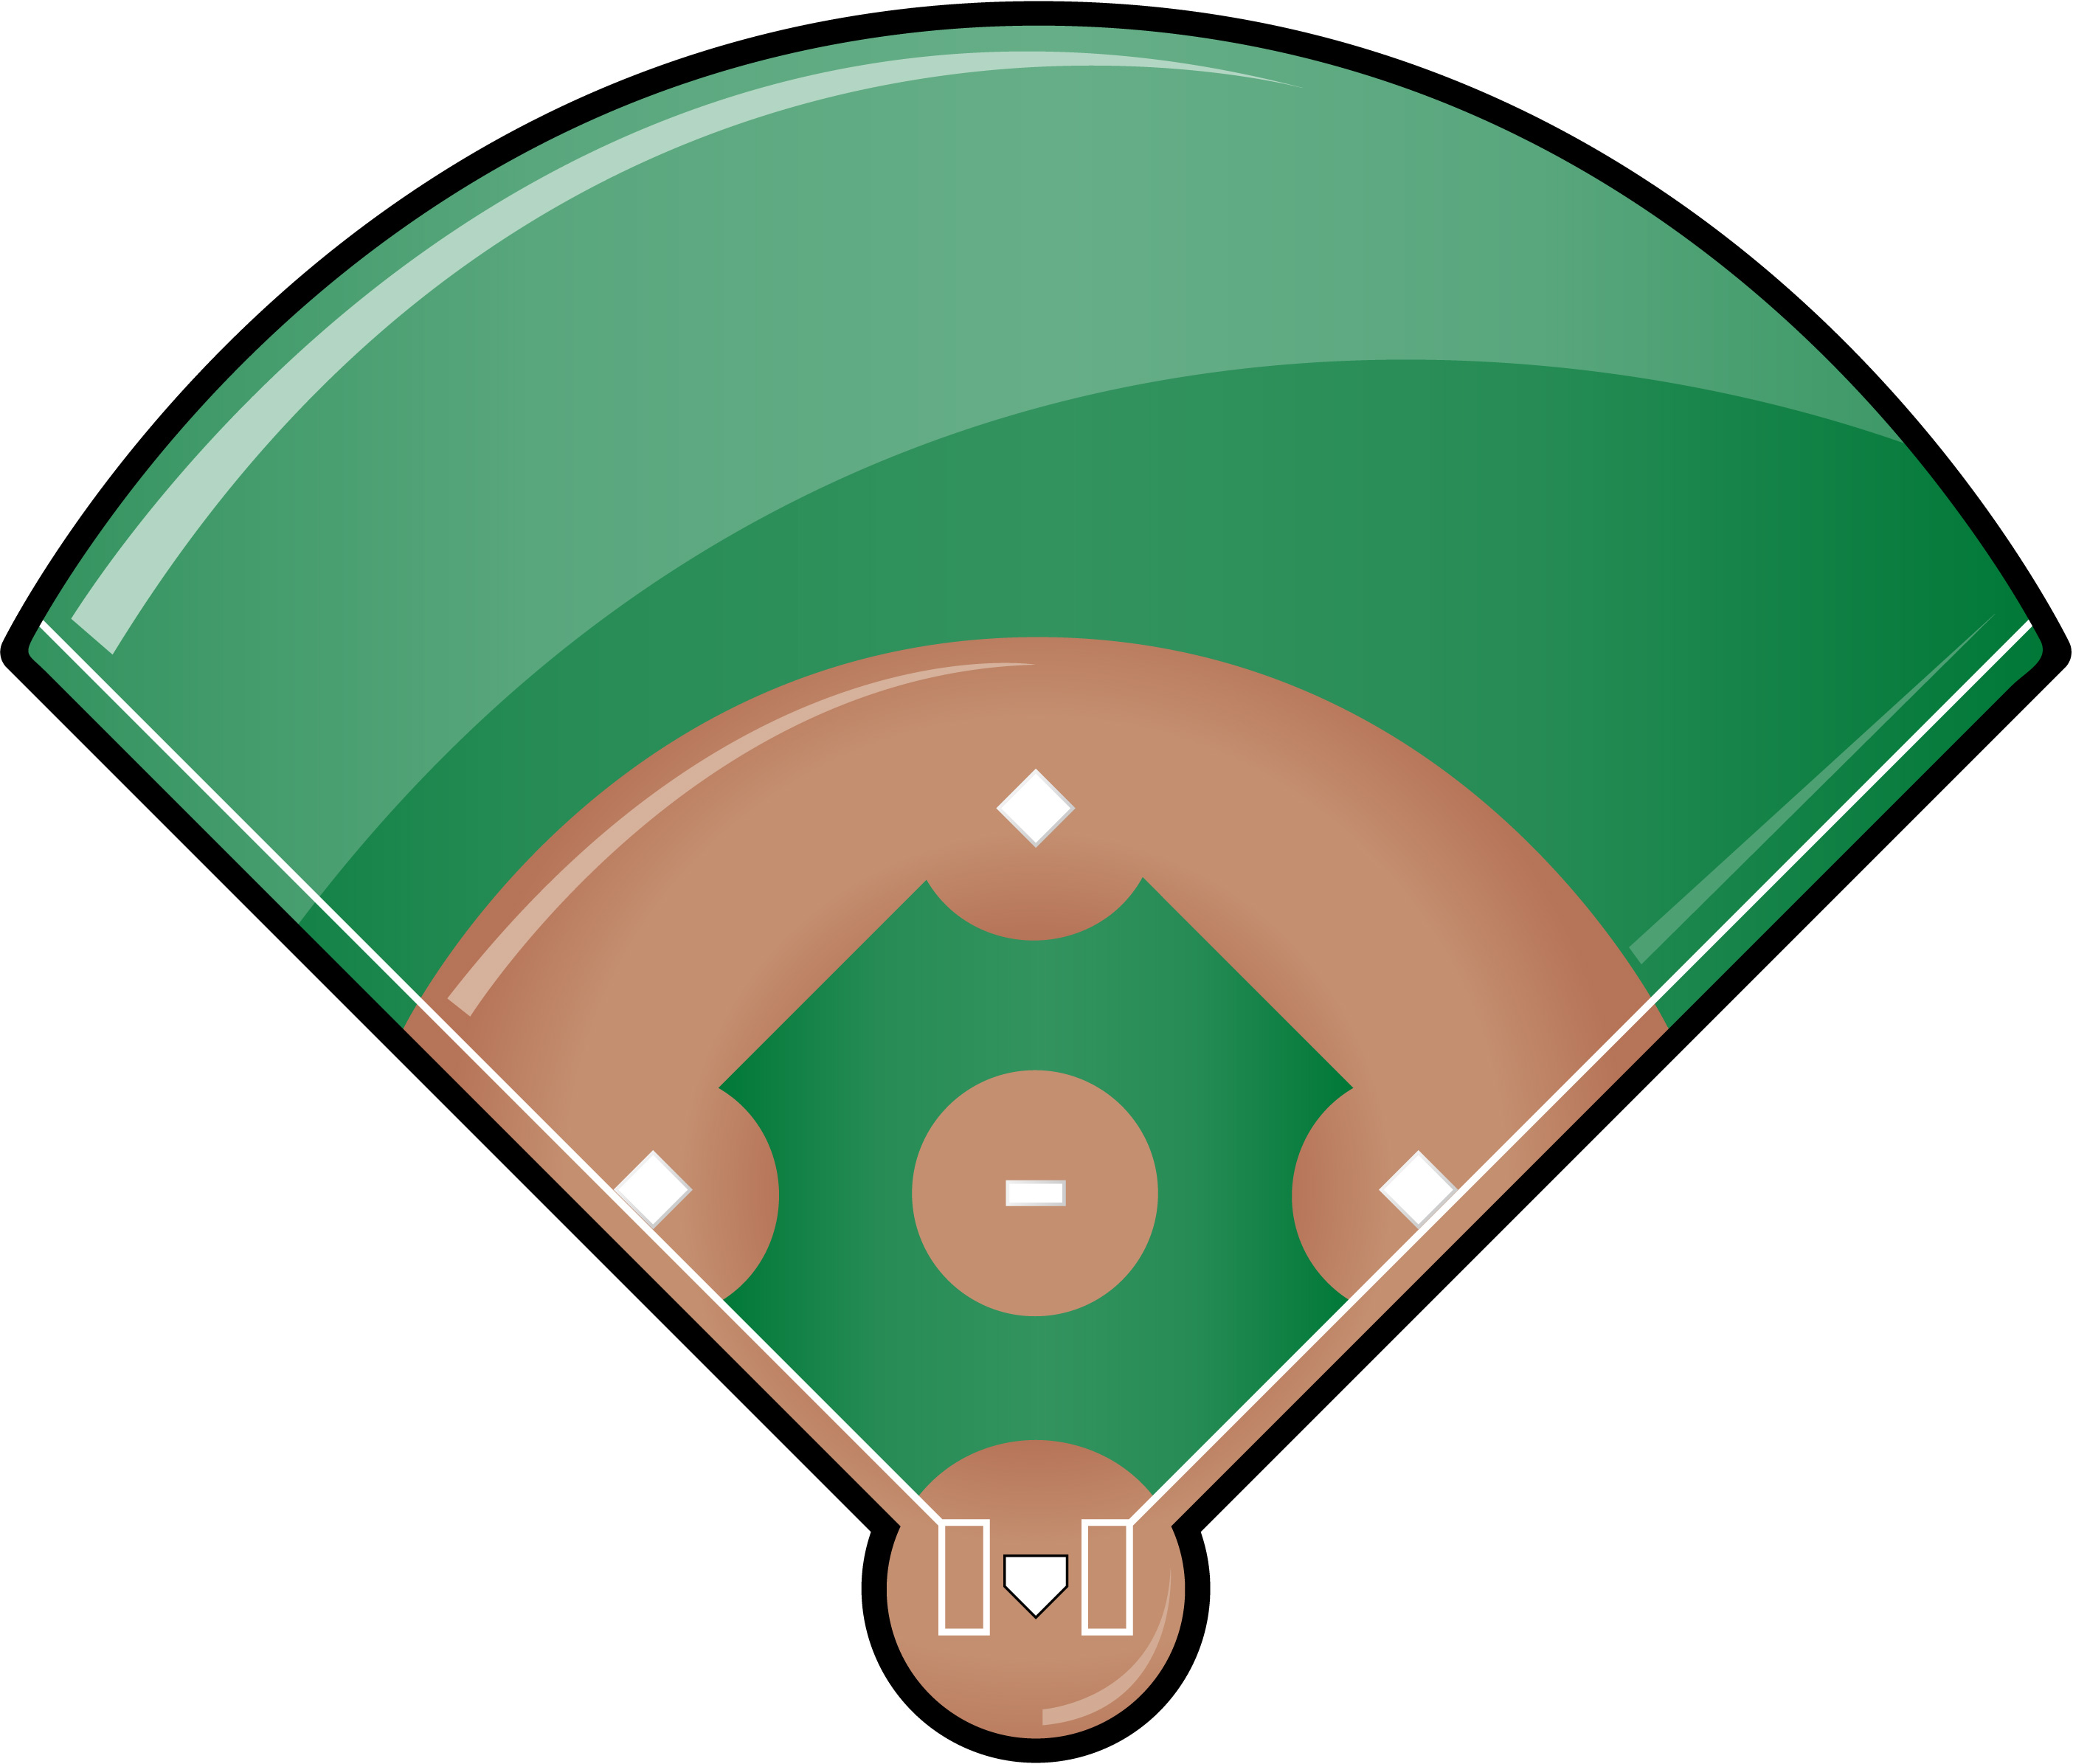 baseball-diamond-images-cliparts-co